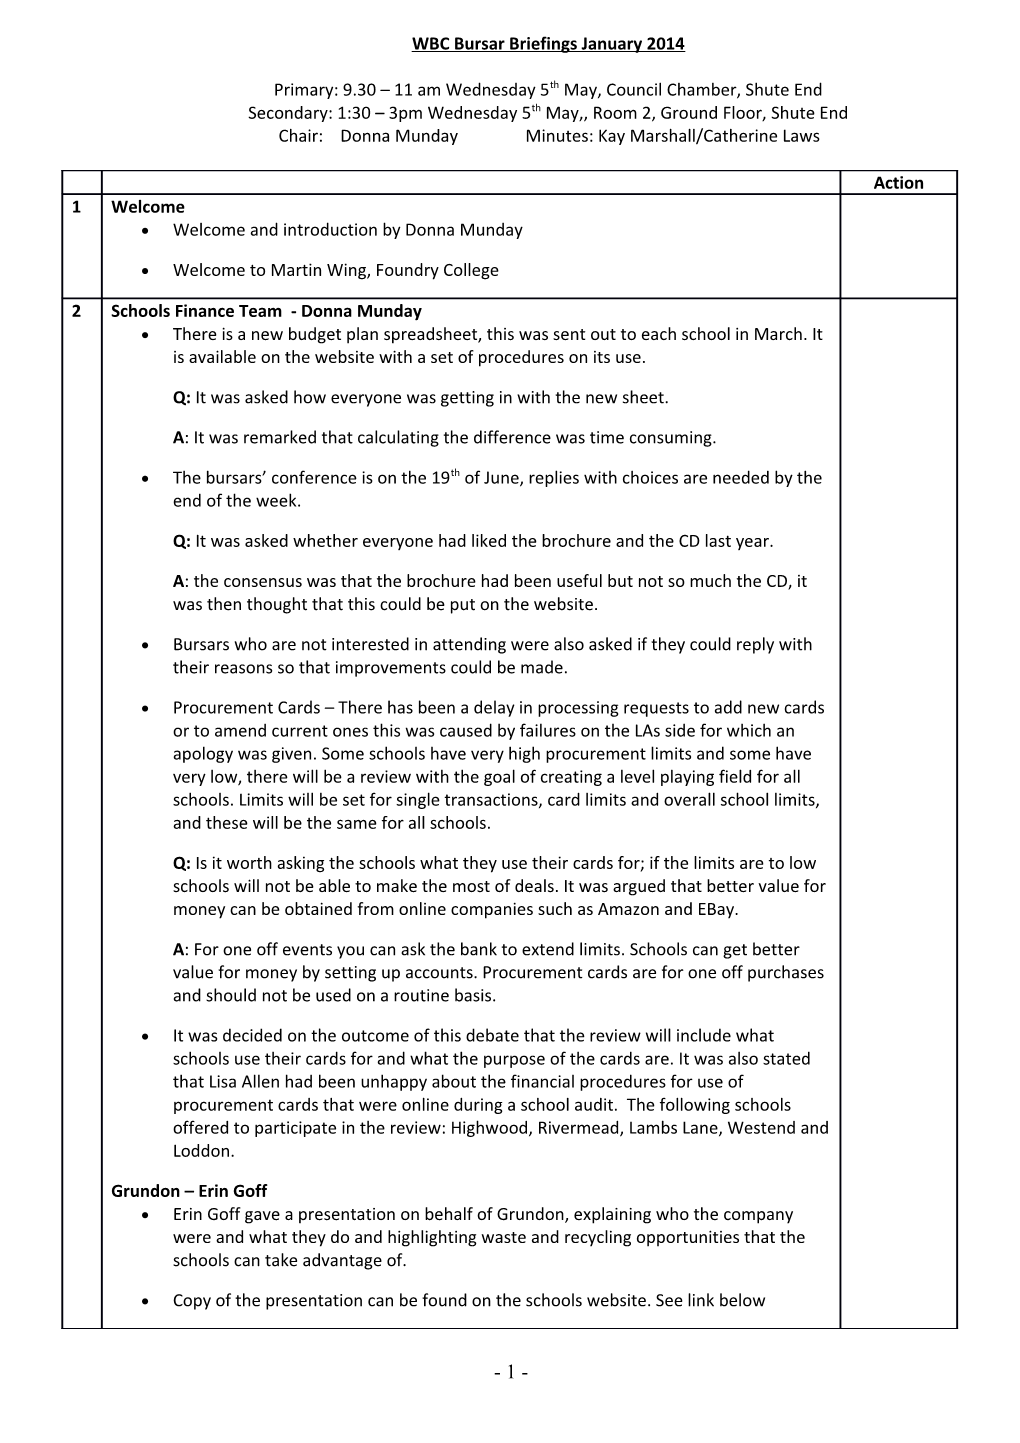 Bursar Briefings - Agenda Suggestions